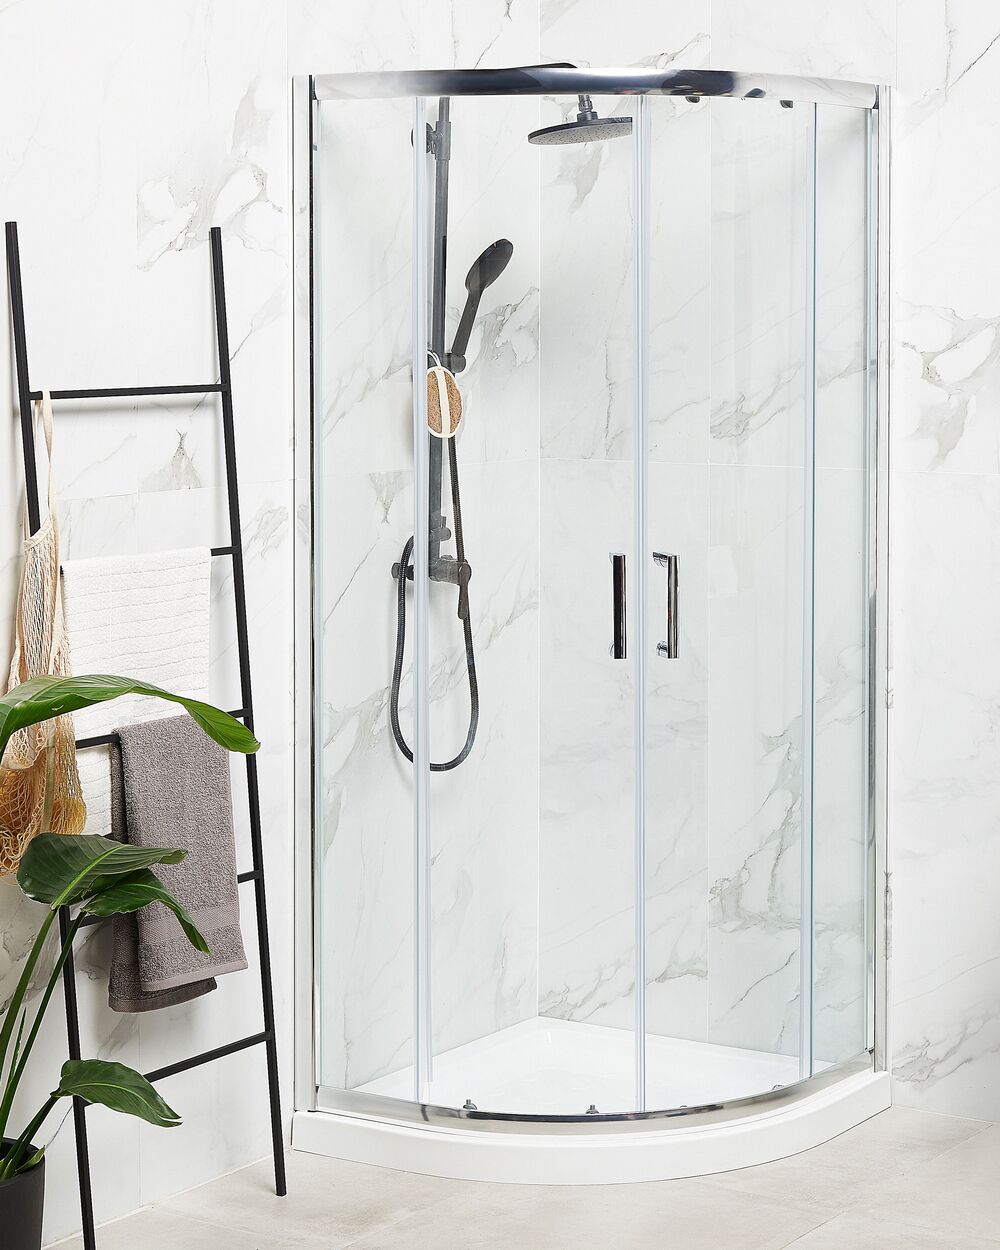 Cristal Esquina. cabinas de ducha 90 x 90 x 200 Mampara ESG Completo ducha  cuarto de baño